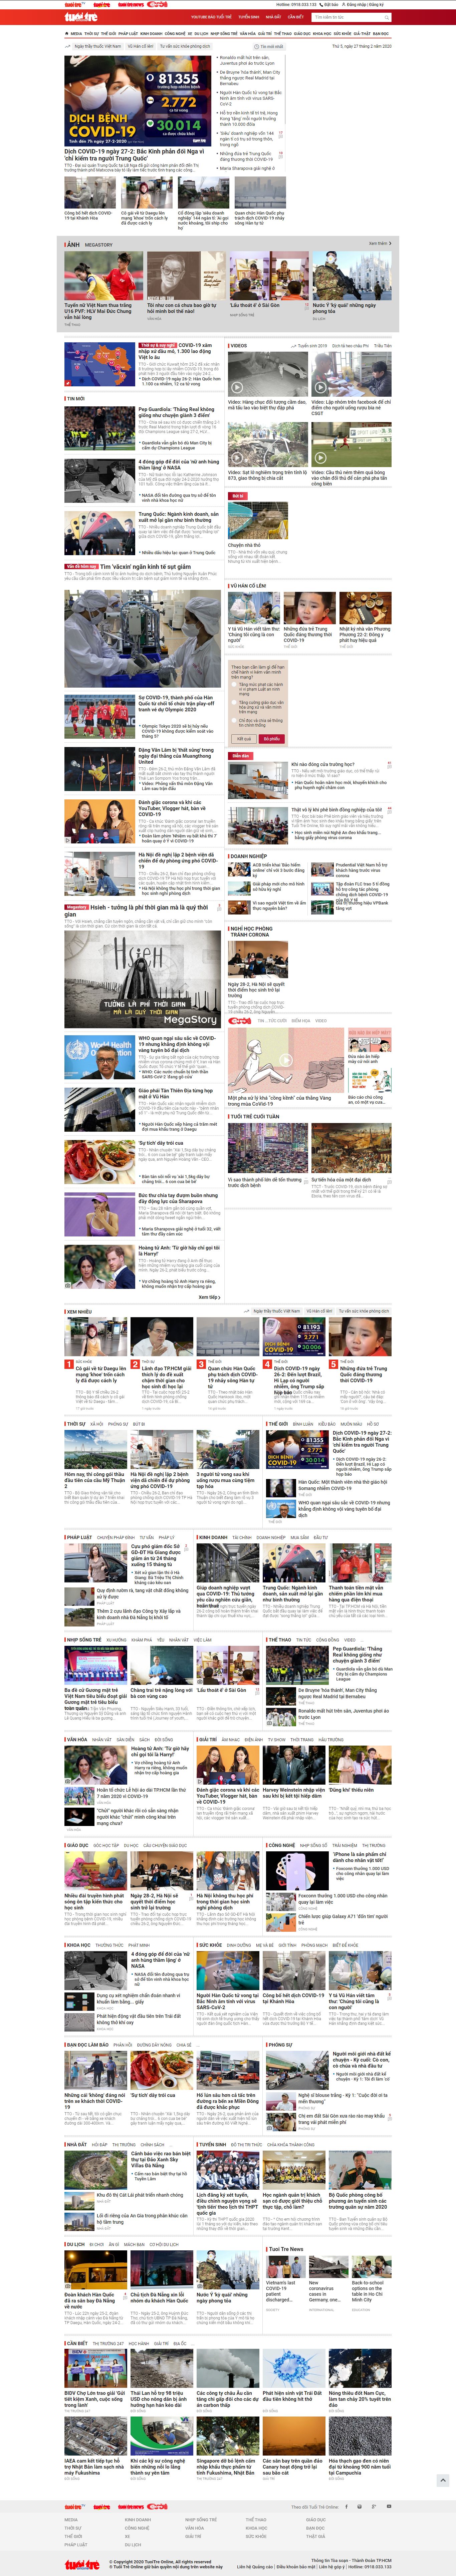 Thiết kế Website báo chí - tuoitre.vn